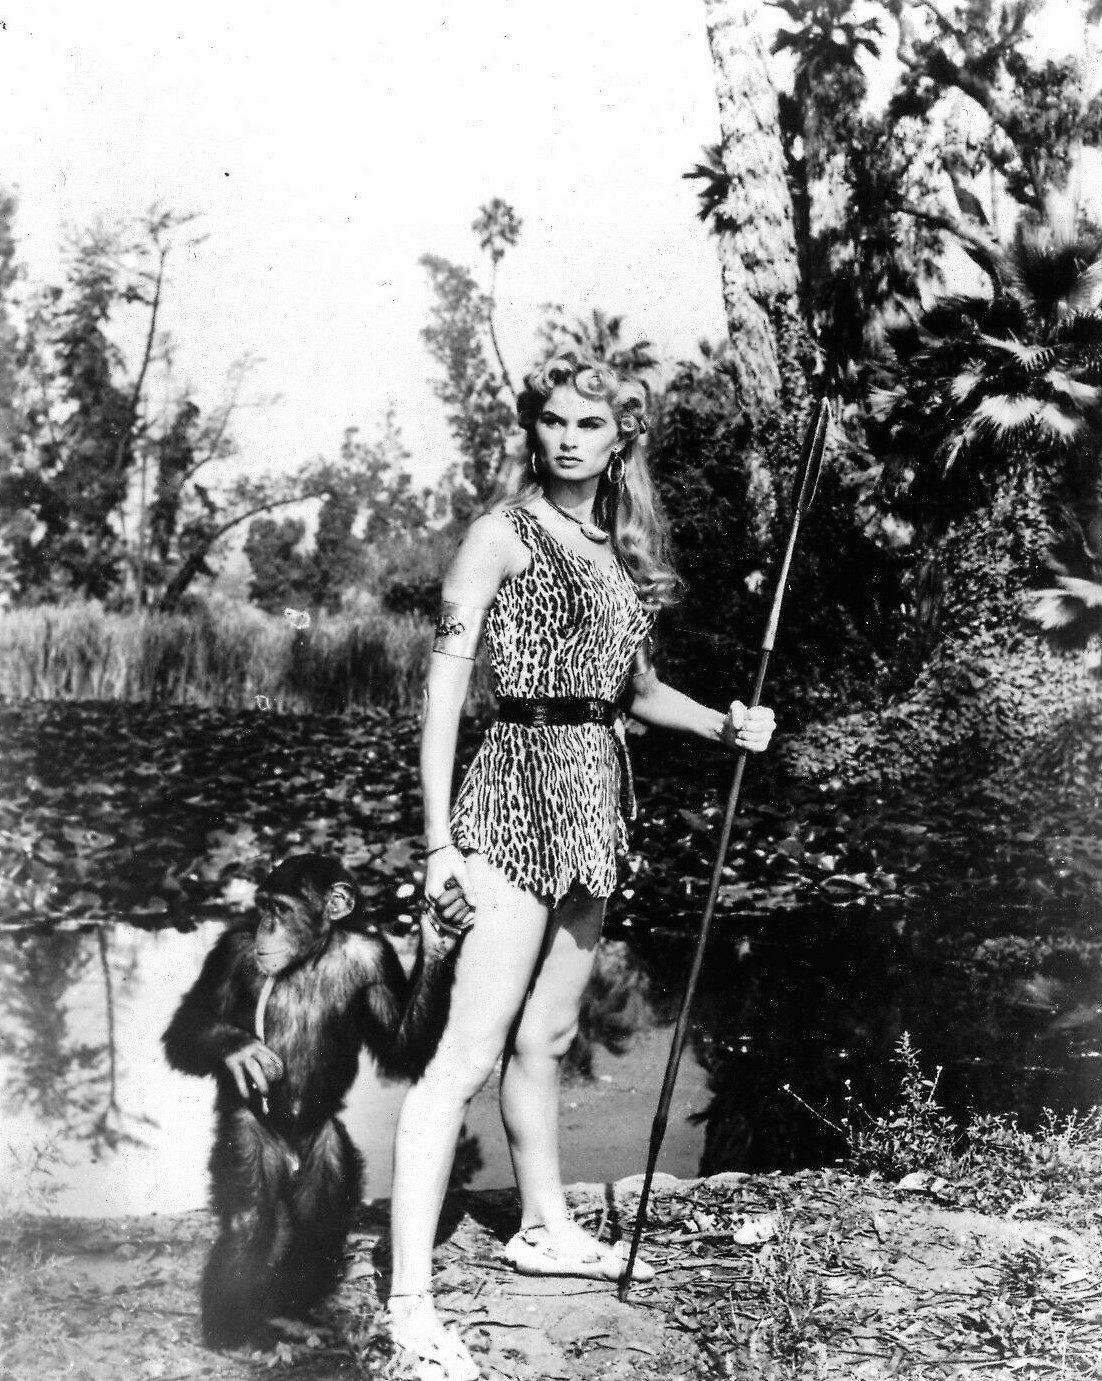 Irish McCalla as Sheena, Queen of the Jungle (1955)